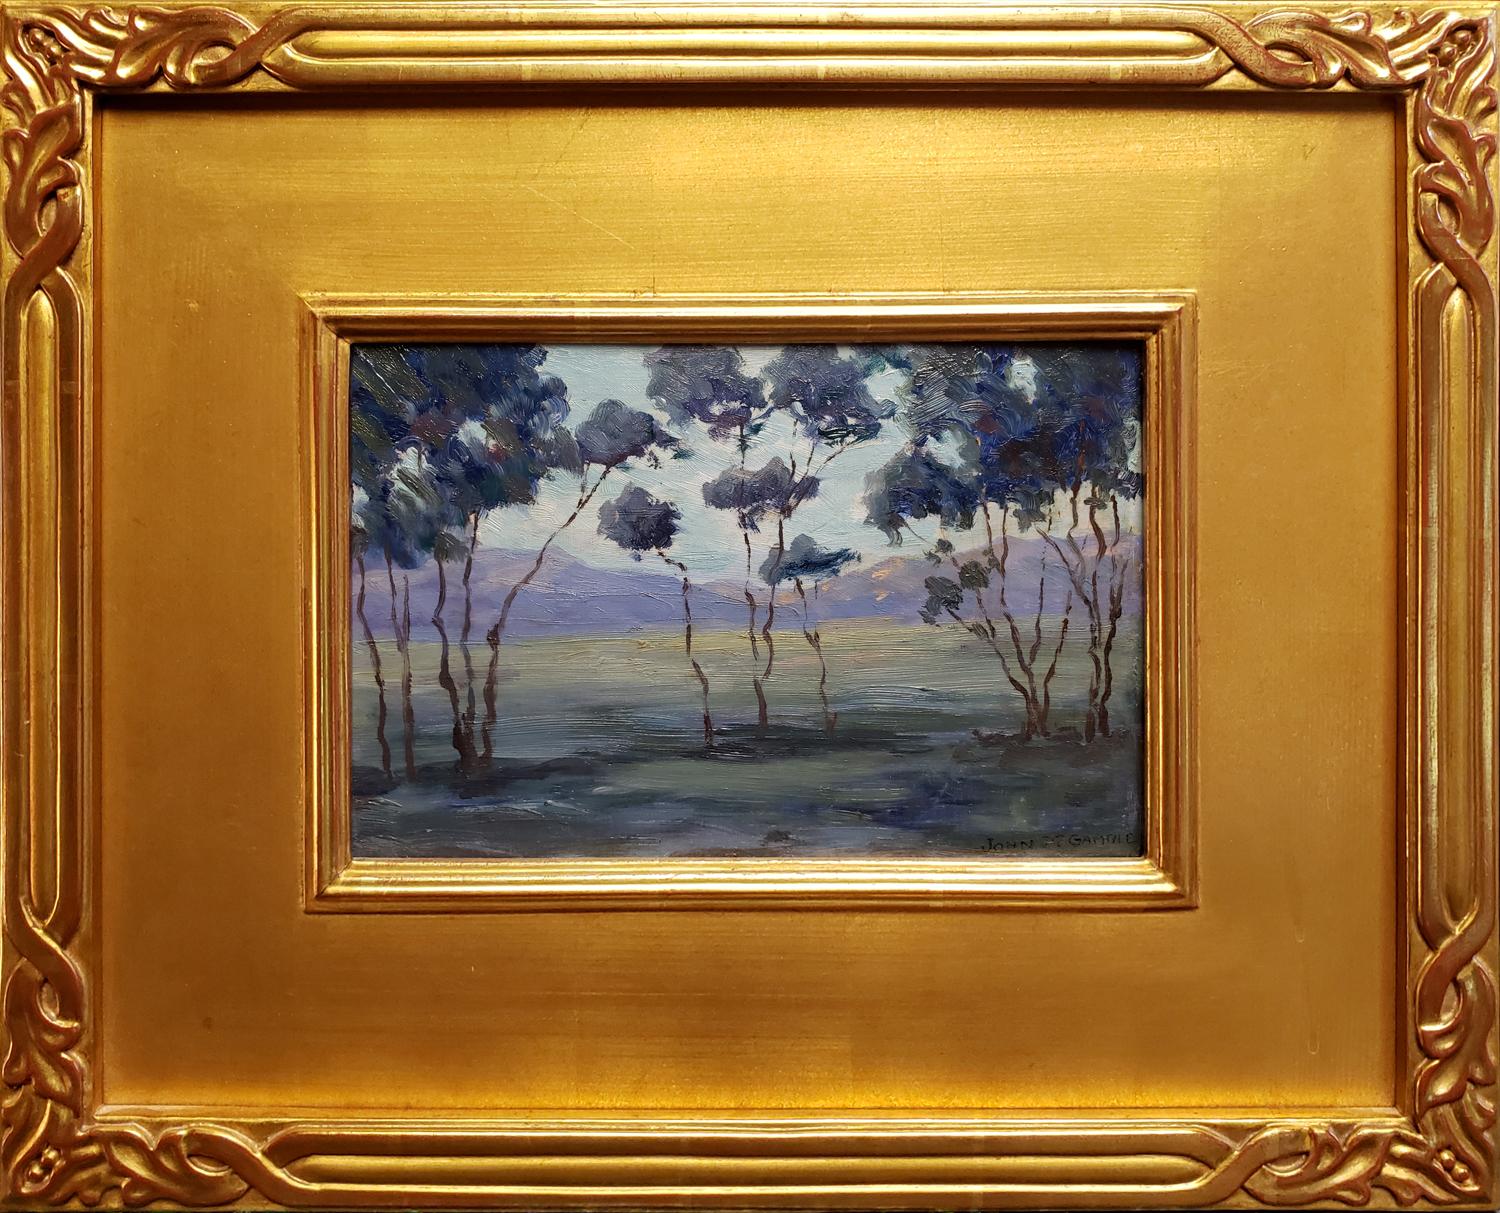 Untitled - Eucalyptus Landscape, c. 1920s - Painting by John Marshall Gamble